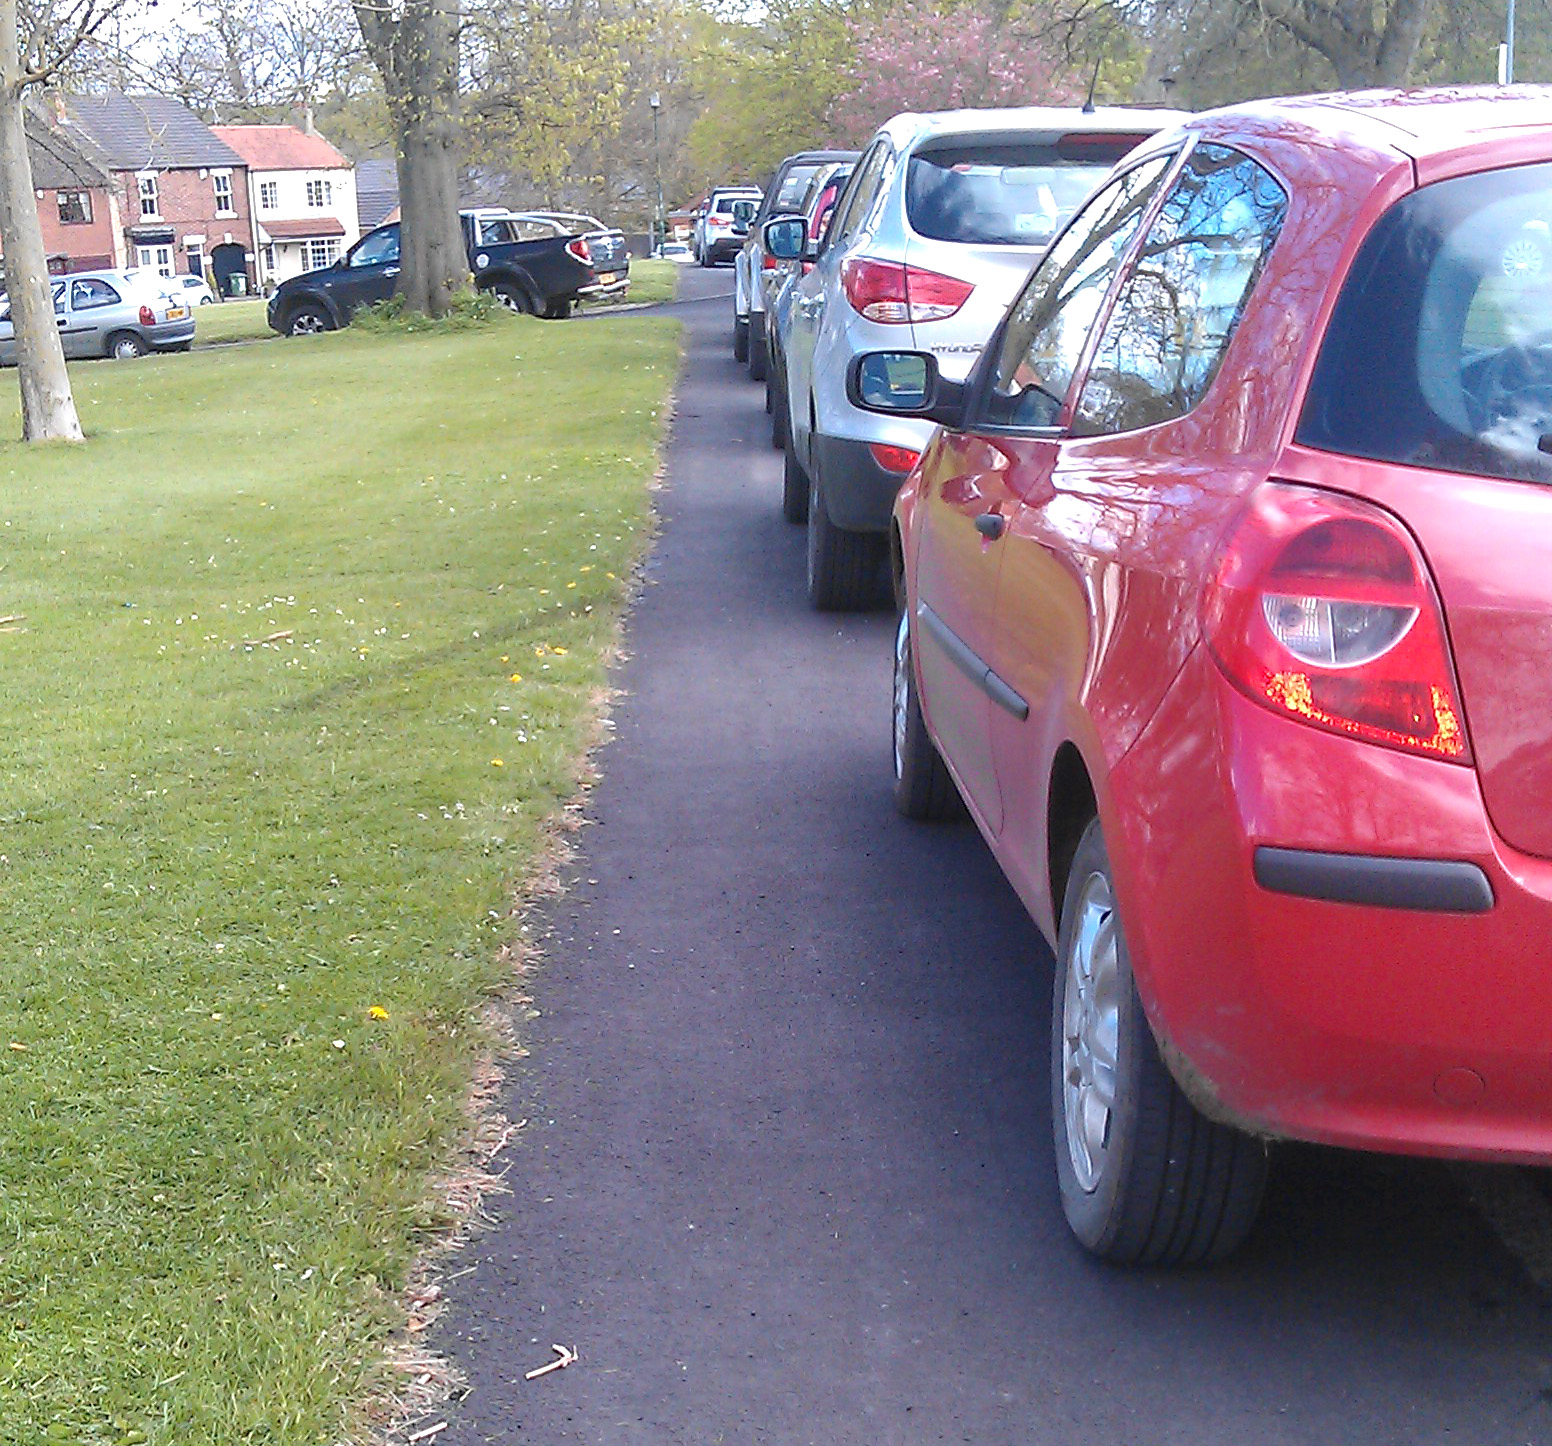 Parking Problem at Aycliffe Village